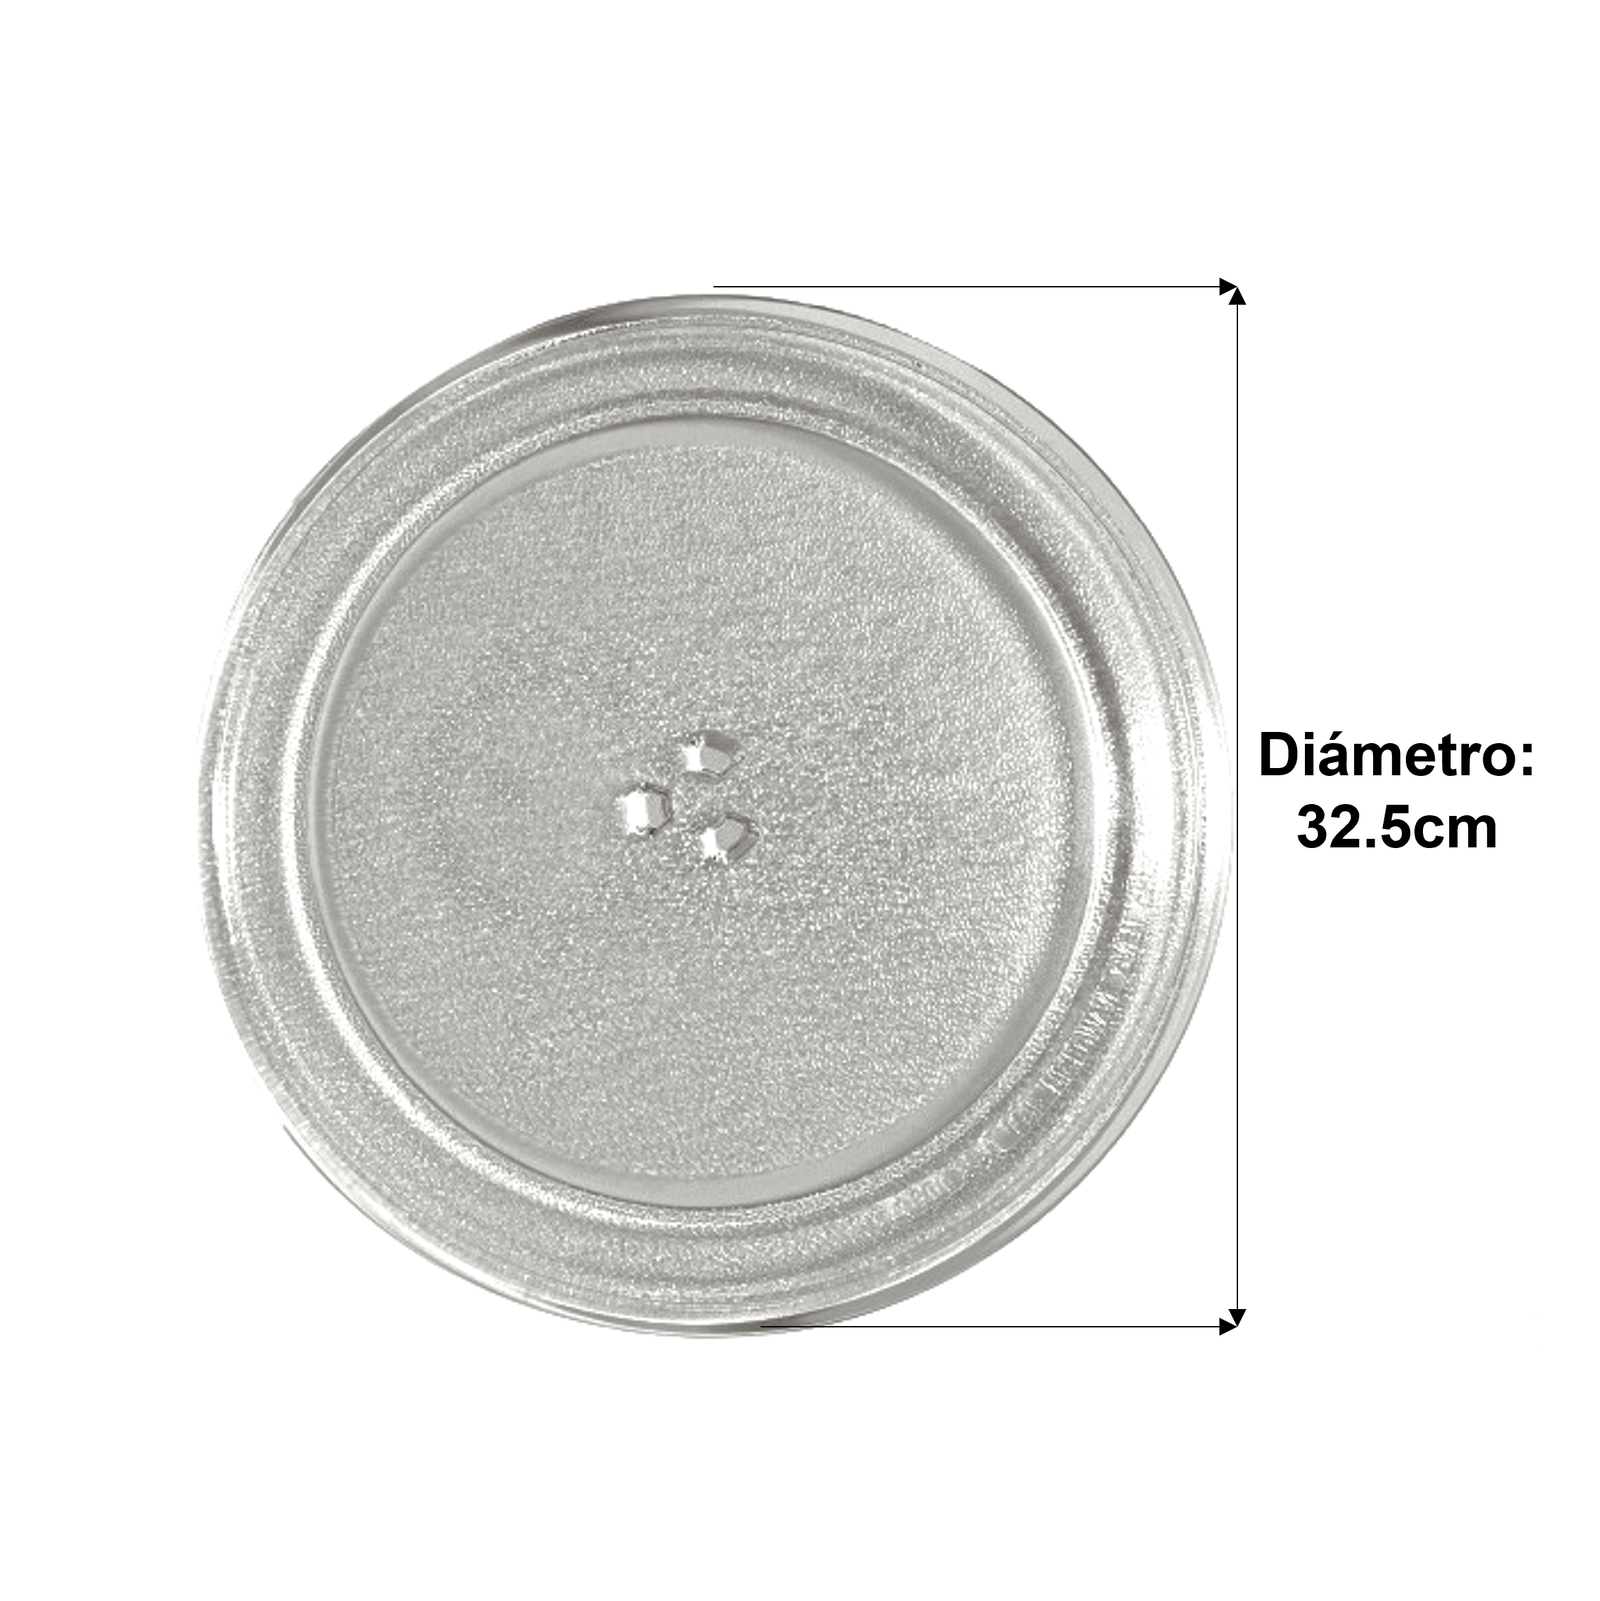 Plato Giratorio Microondas – Diámetro 32.5cm Trébol – My Home